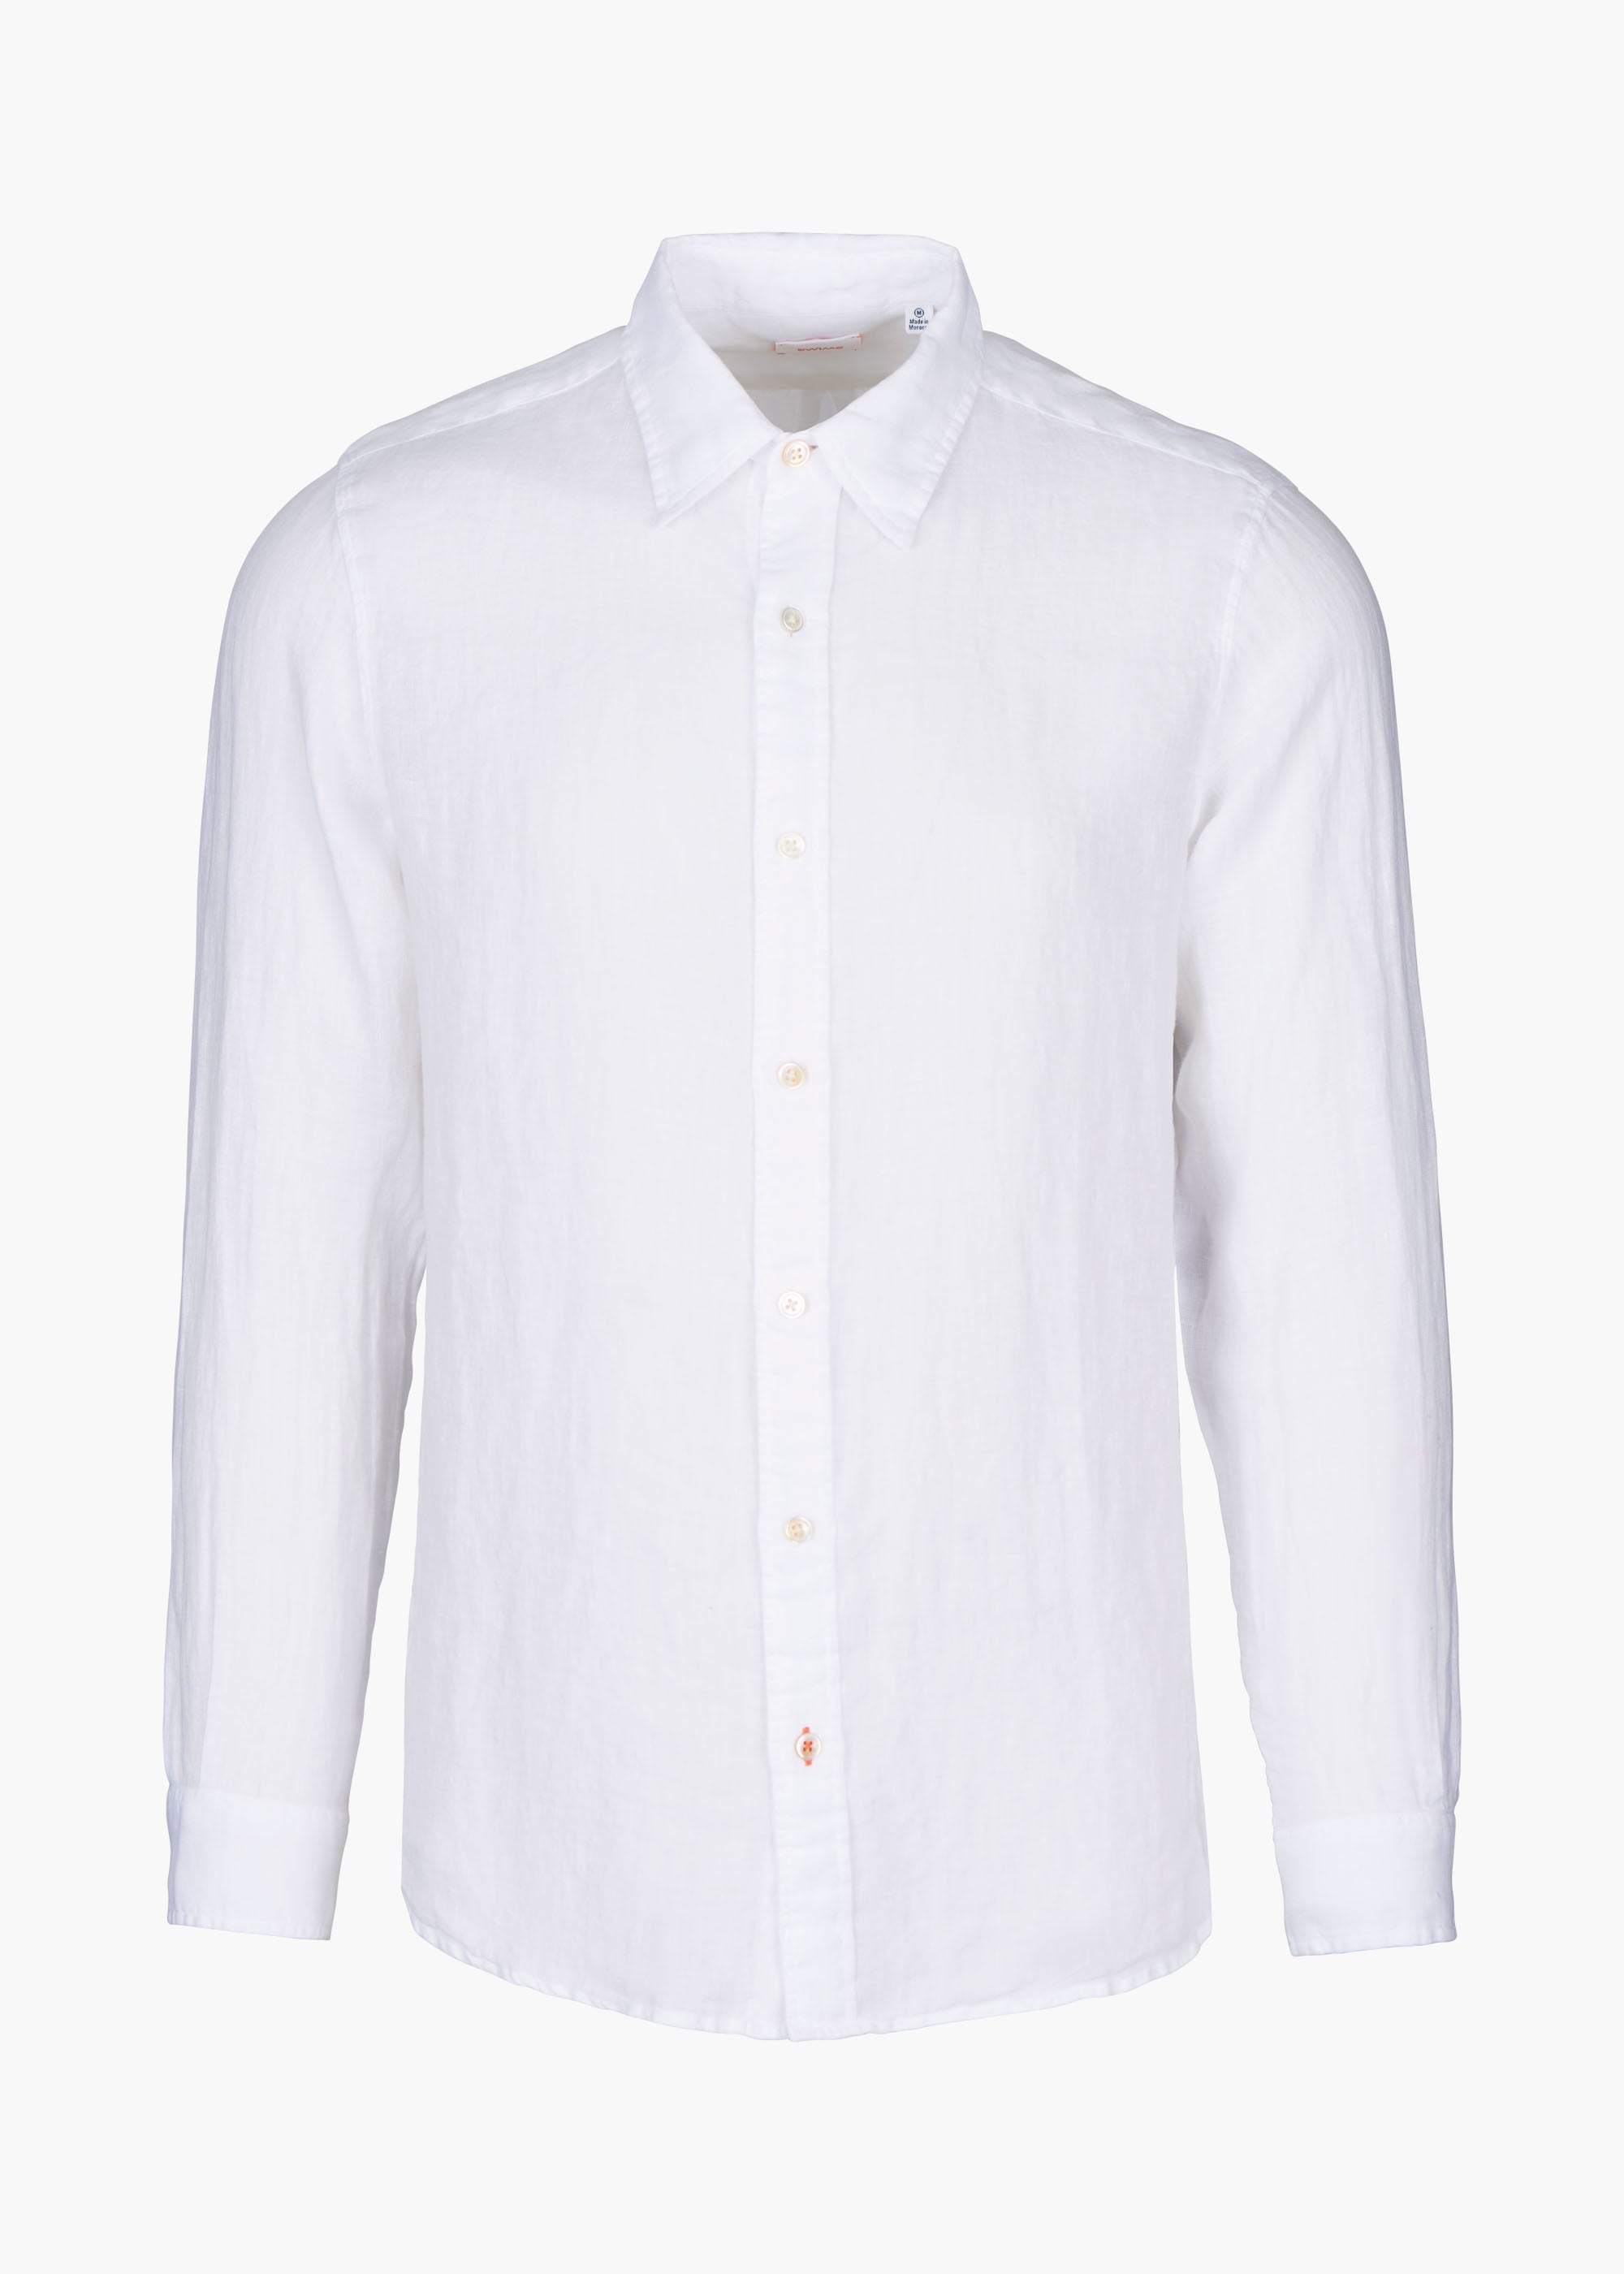 Amalfi Linen Shirt - background::white,variant::White